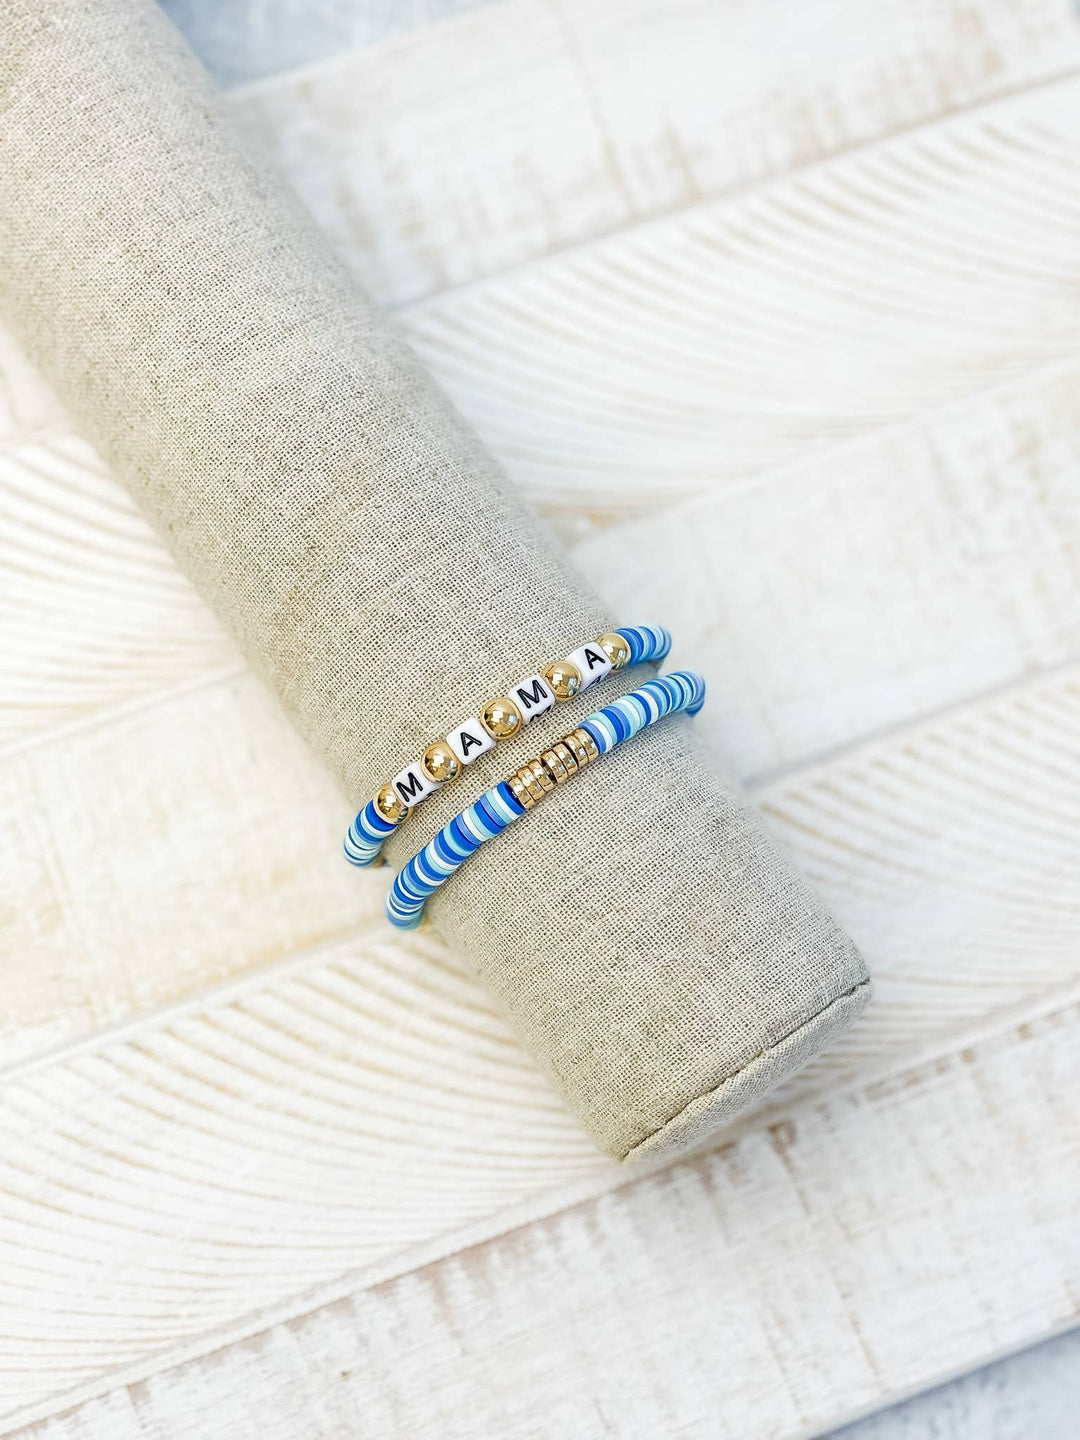 Bracelets - 'Mama' Stretch Bracelet Set - Turquoise